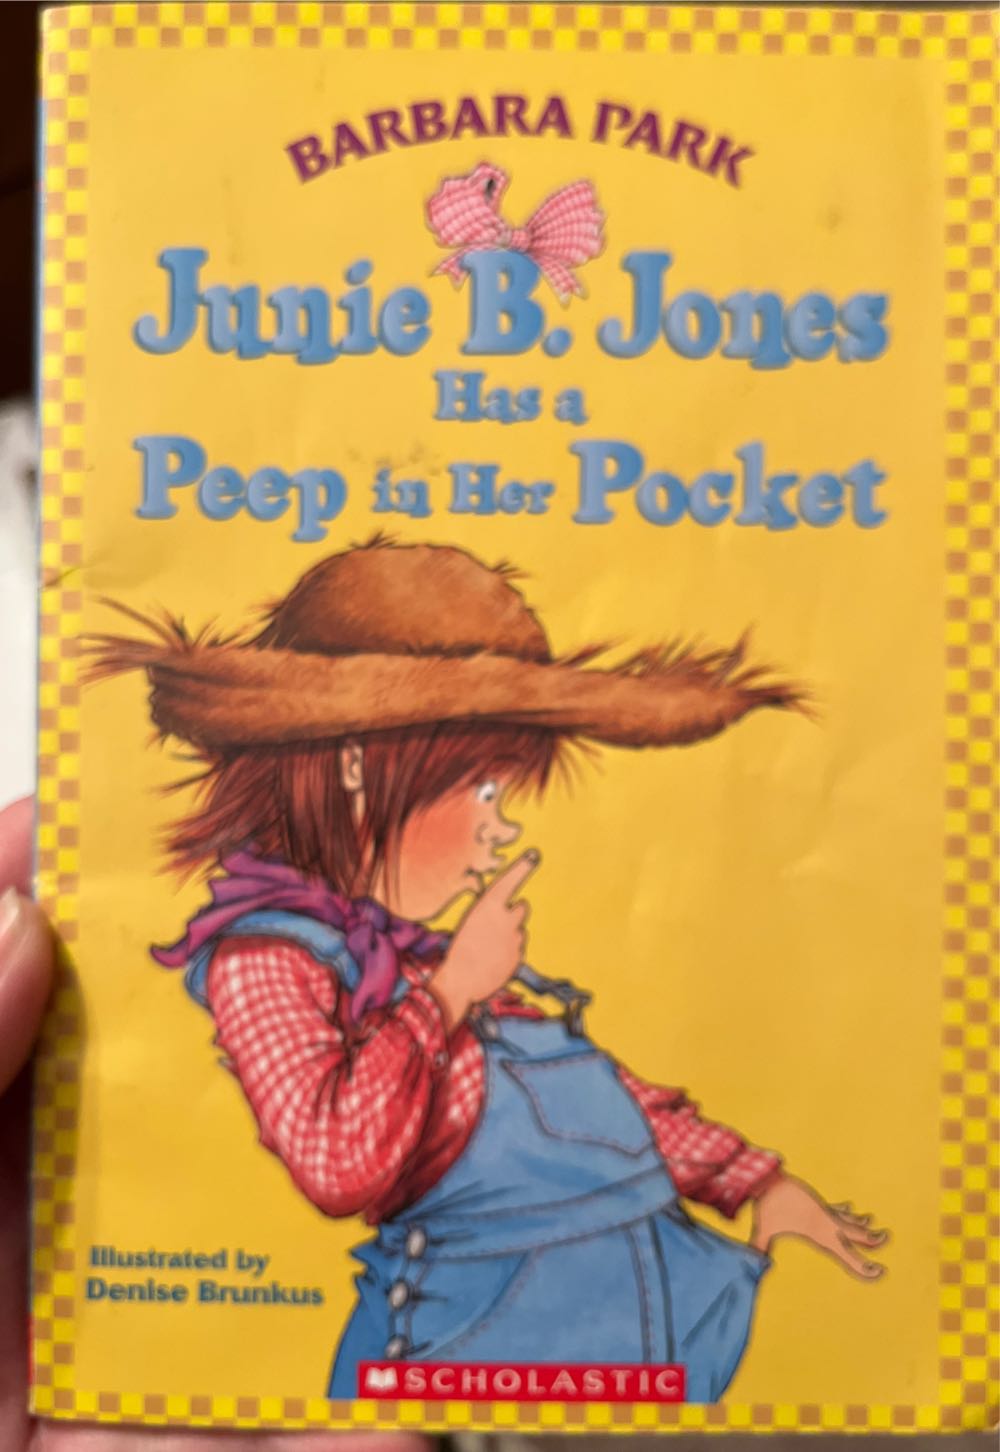 Junie B. Jones #15 Has A Peep In Her Pocket - Barbara Park (Scholastic Inc. - Paperback) book collectible [Barcode 9780439223096] - Main Image 3